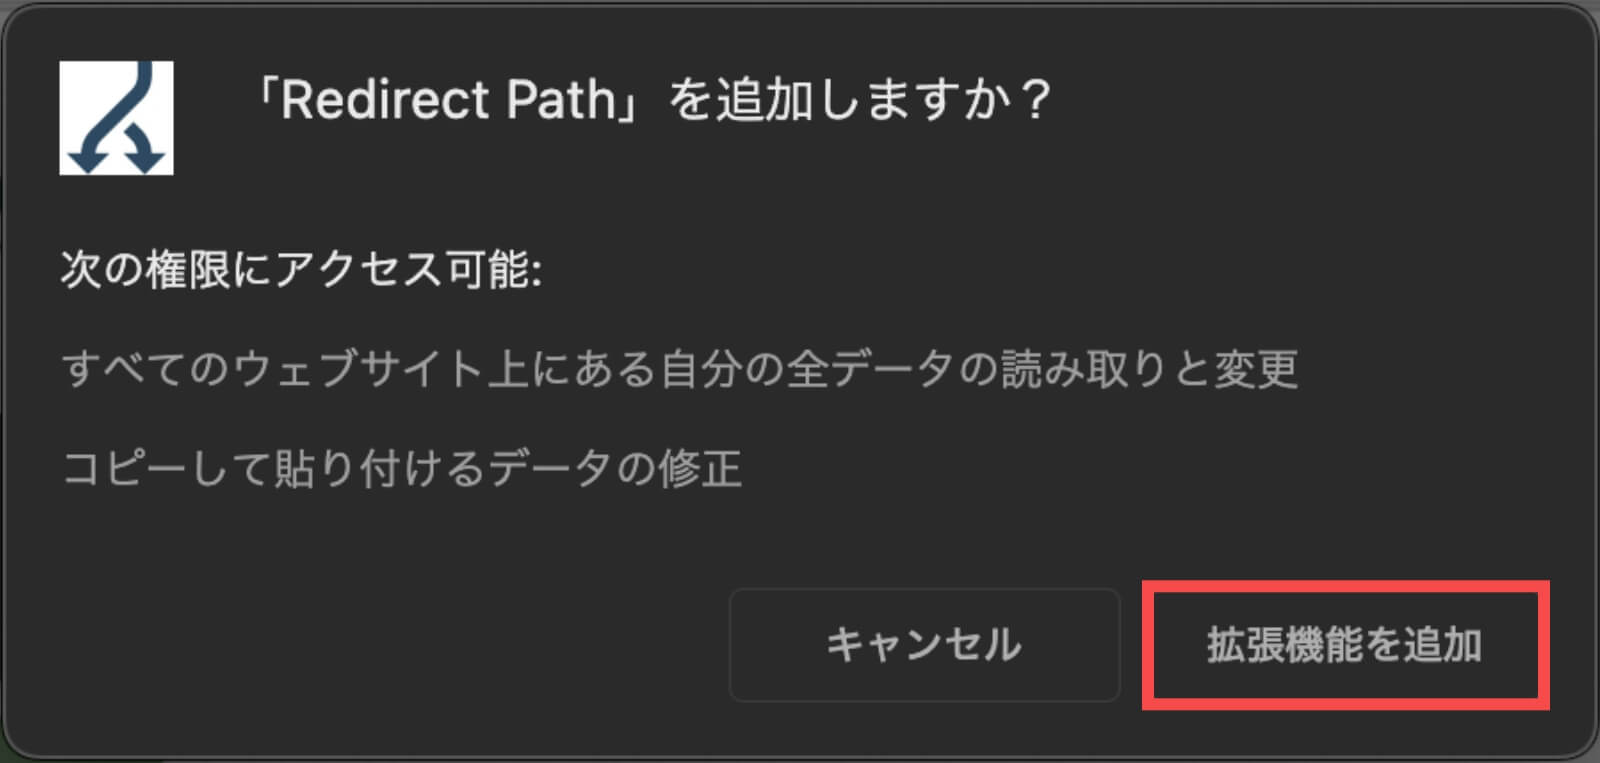 Redirect Path追加ポップアップ画面